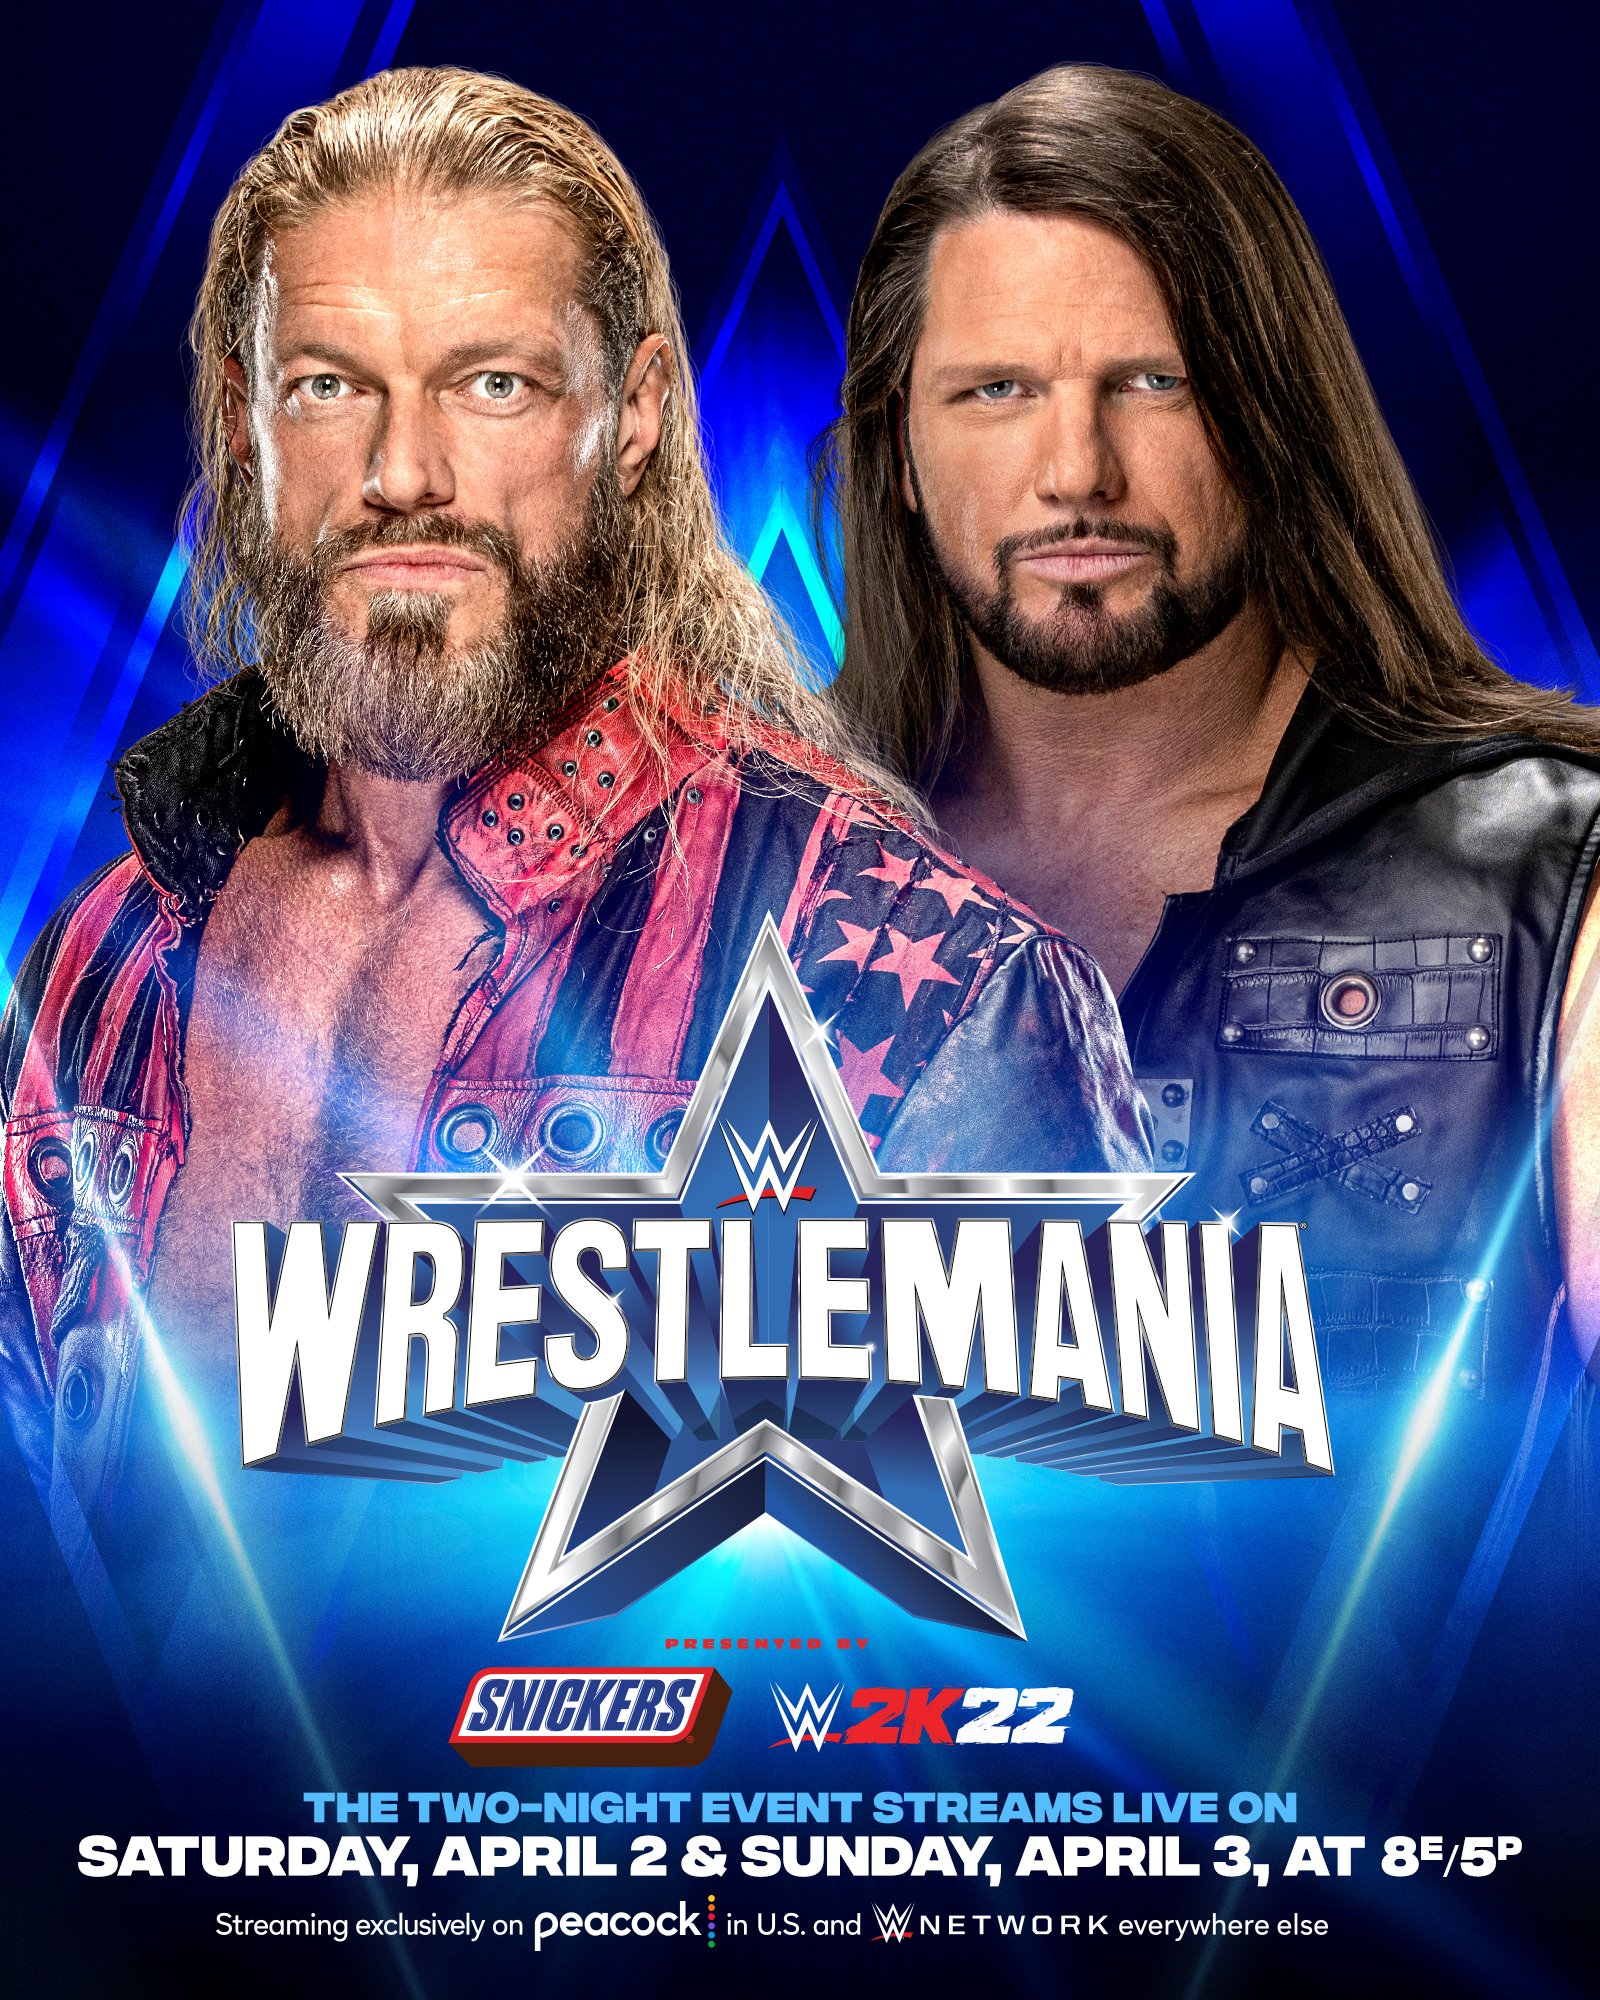 AJ Styles' classic WrestleMania matches